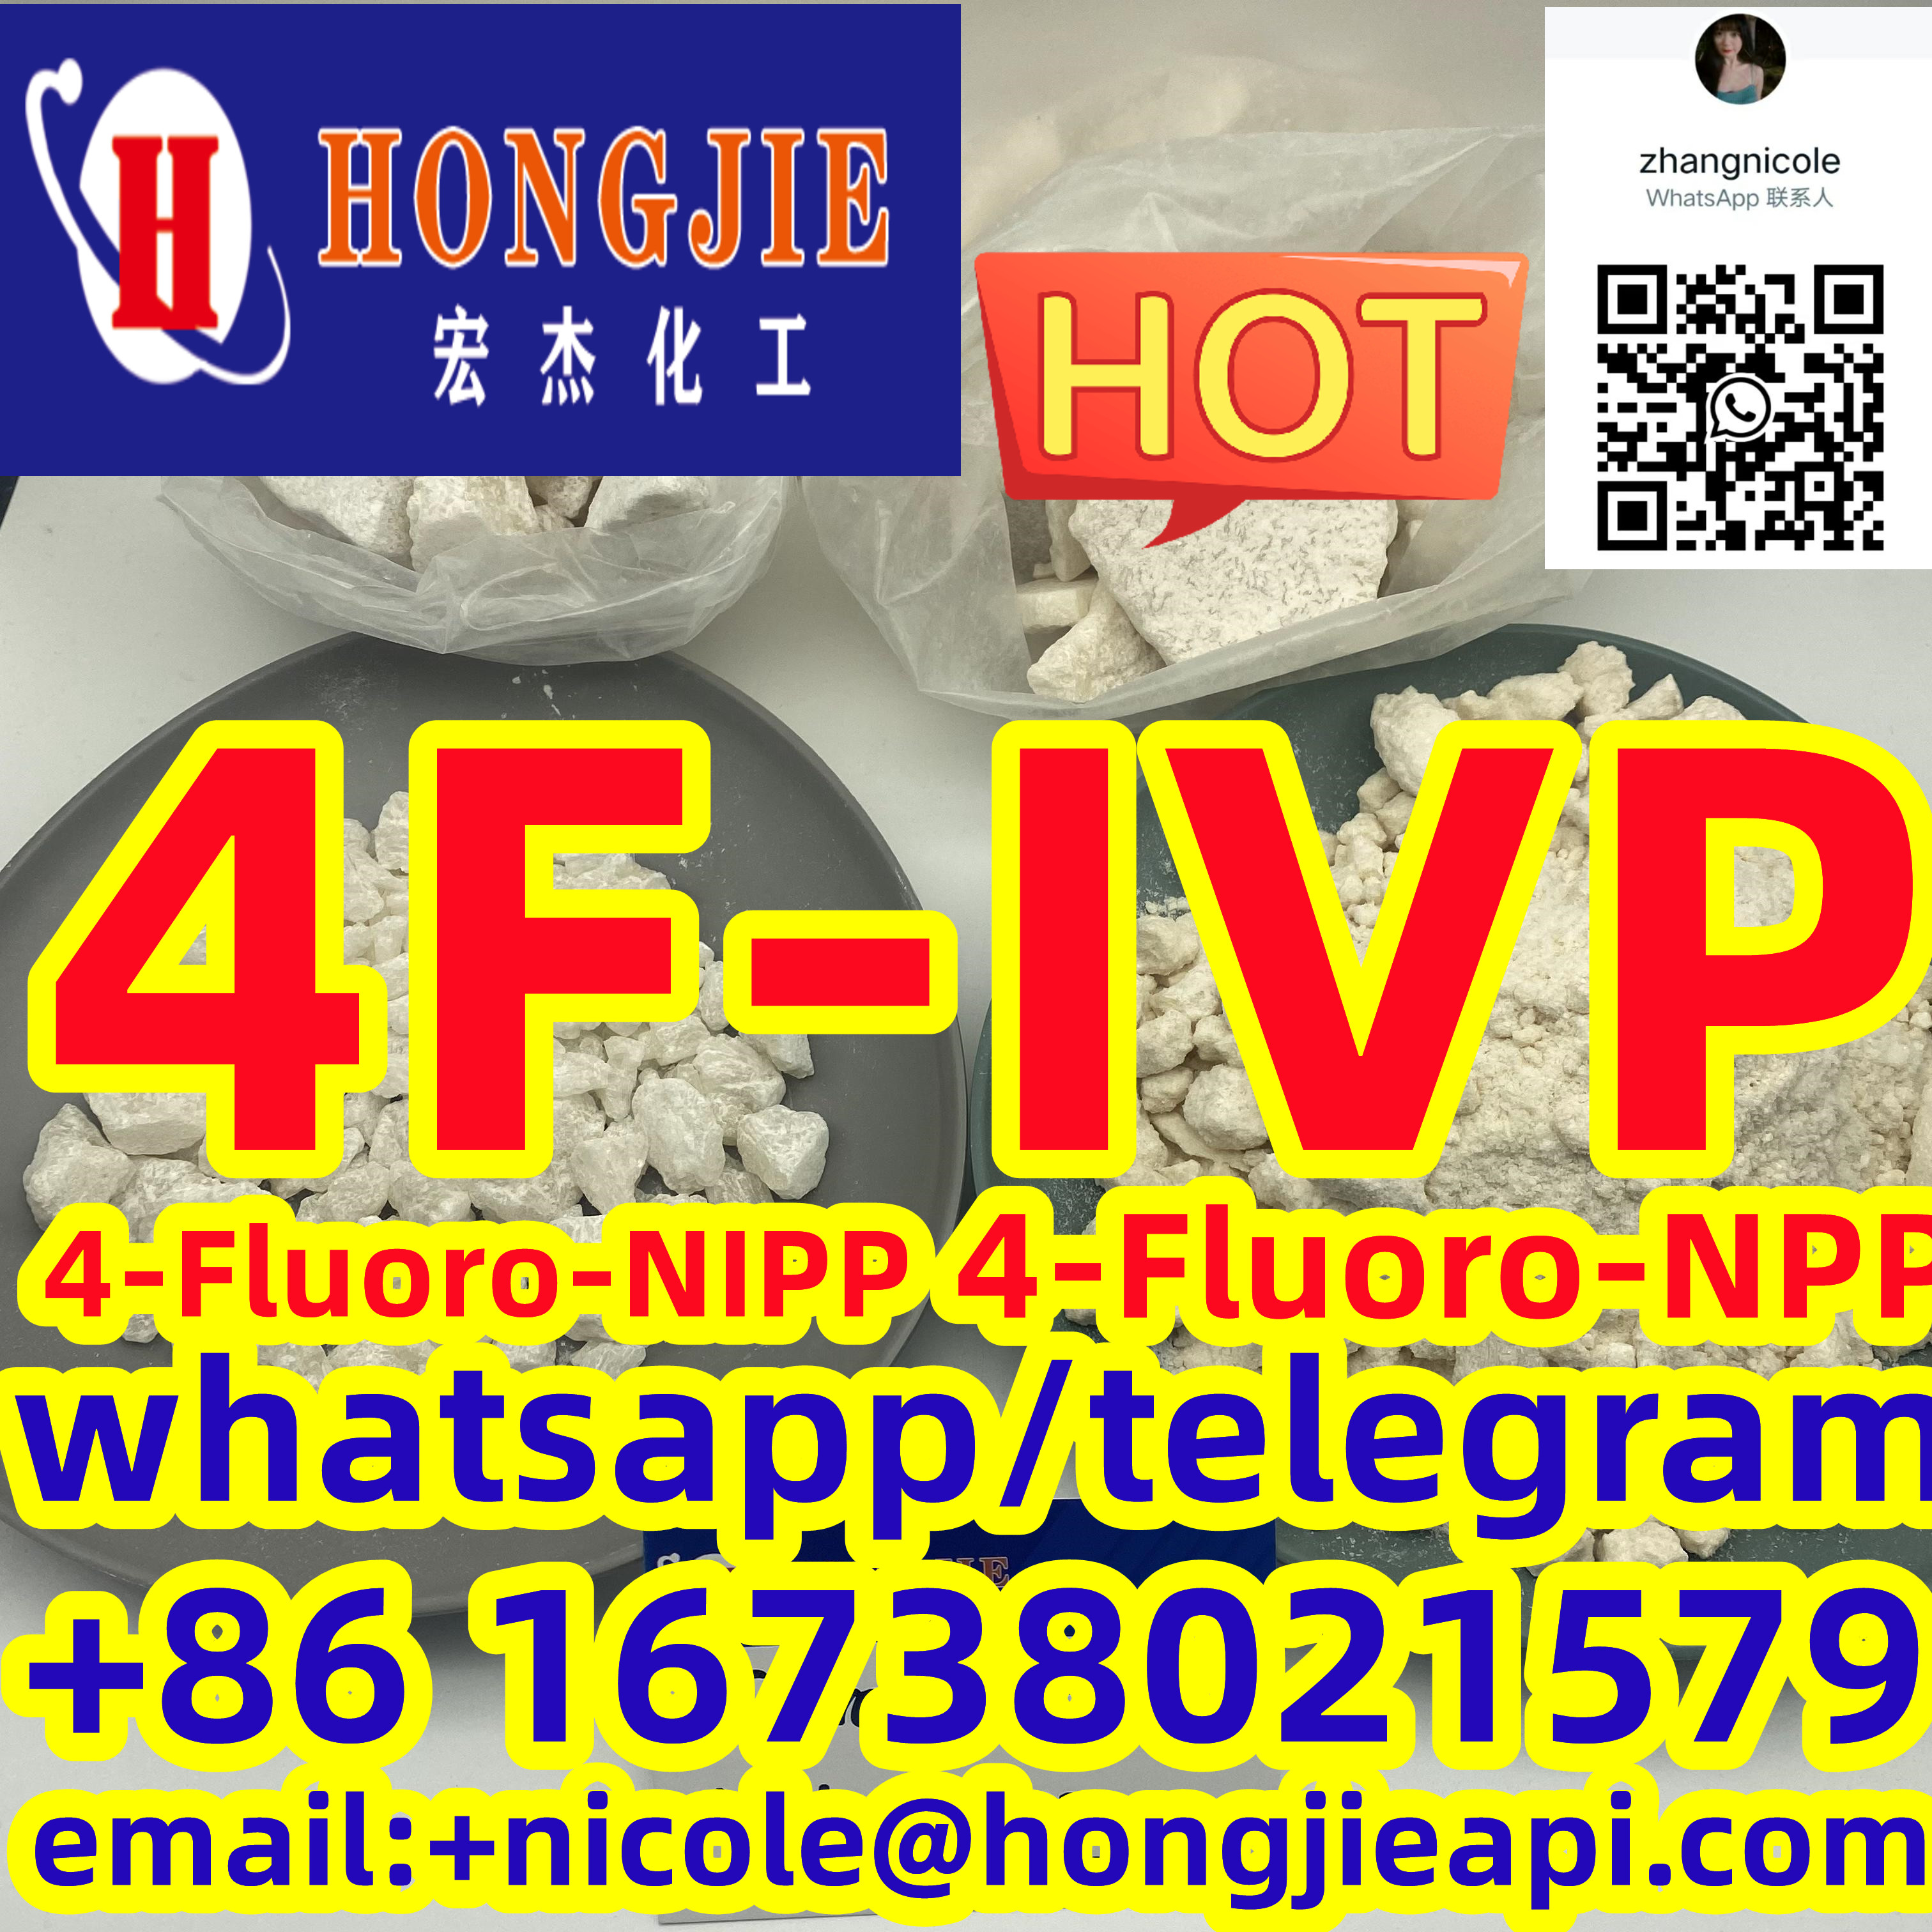 High quality 4F-IVP 4-Fluoro-NPP 4-Fluoro-NIPP